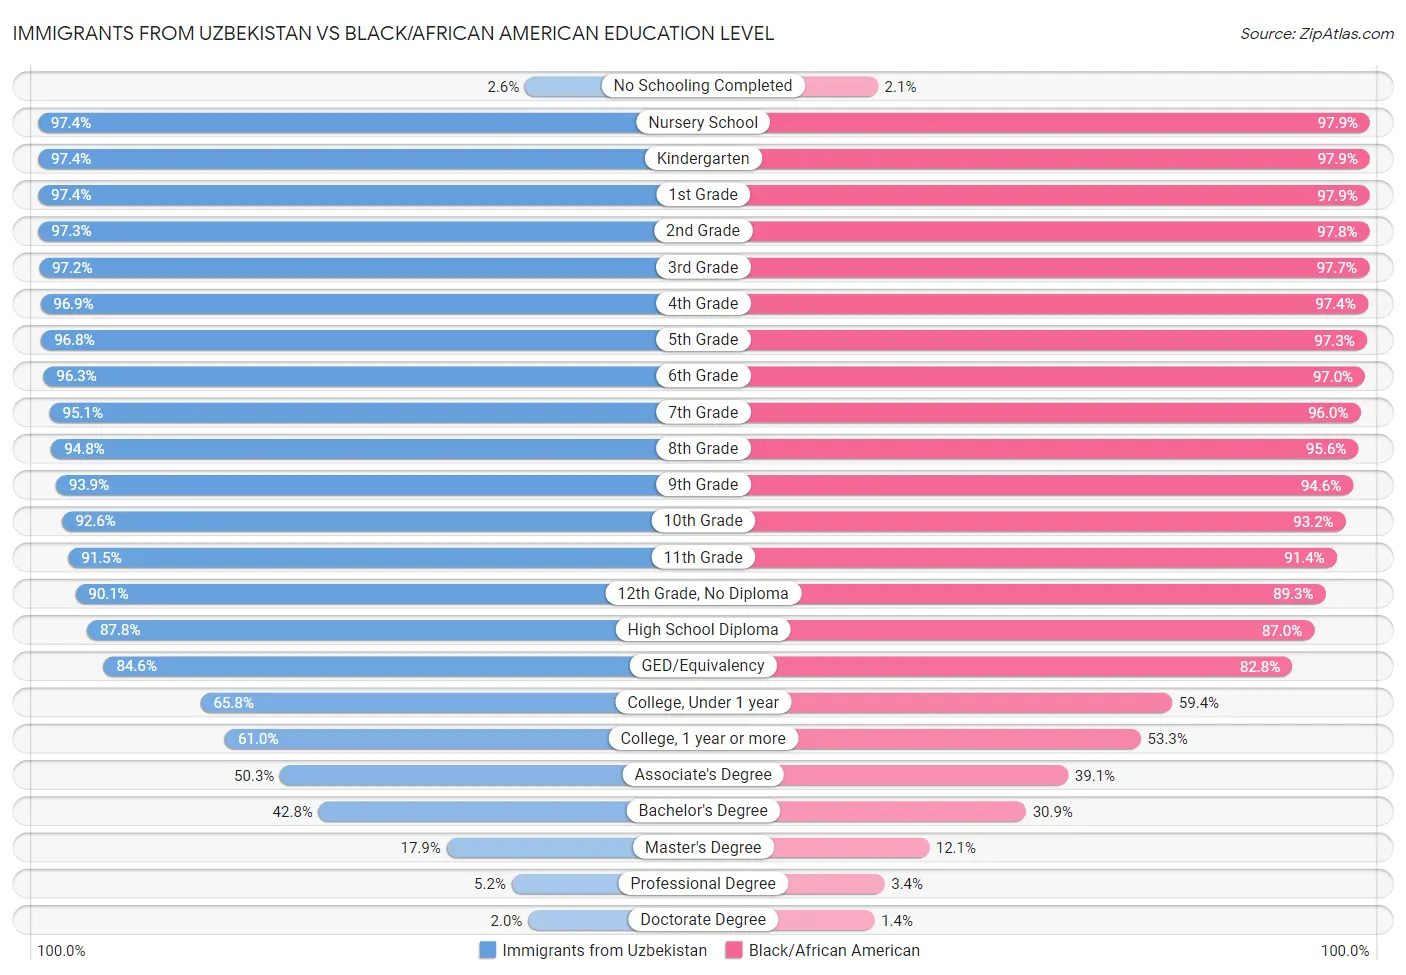 Immigrants from Uzbekistan vs Black/African American Education Level